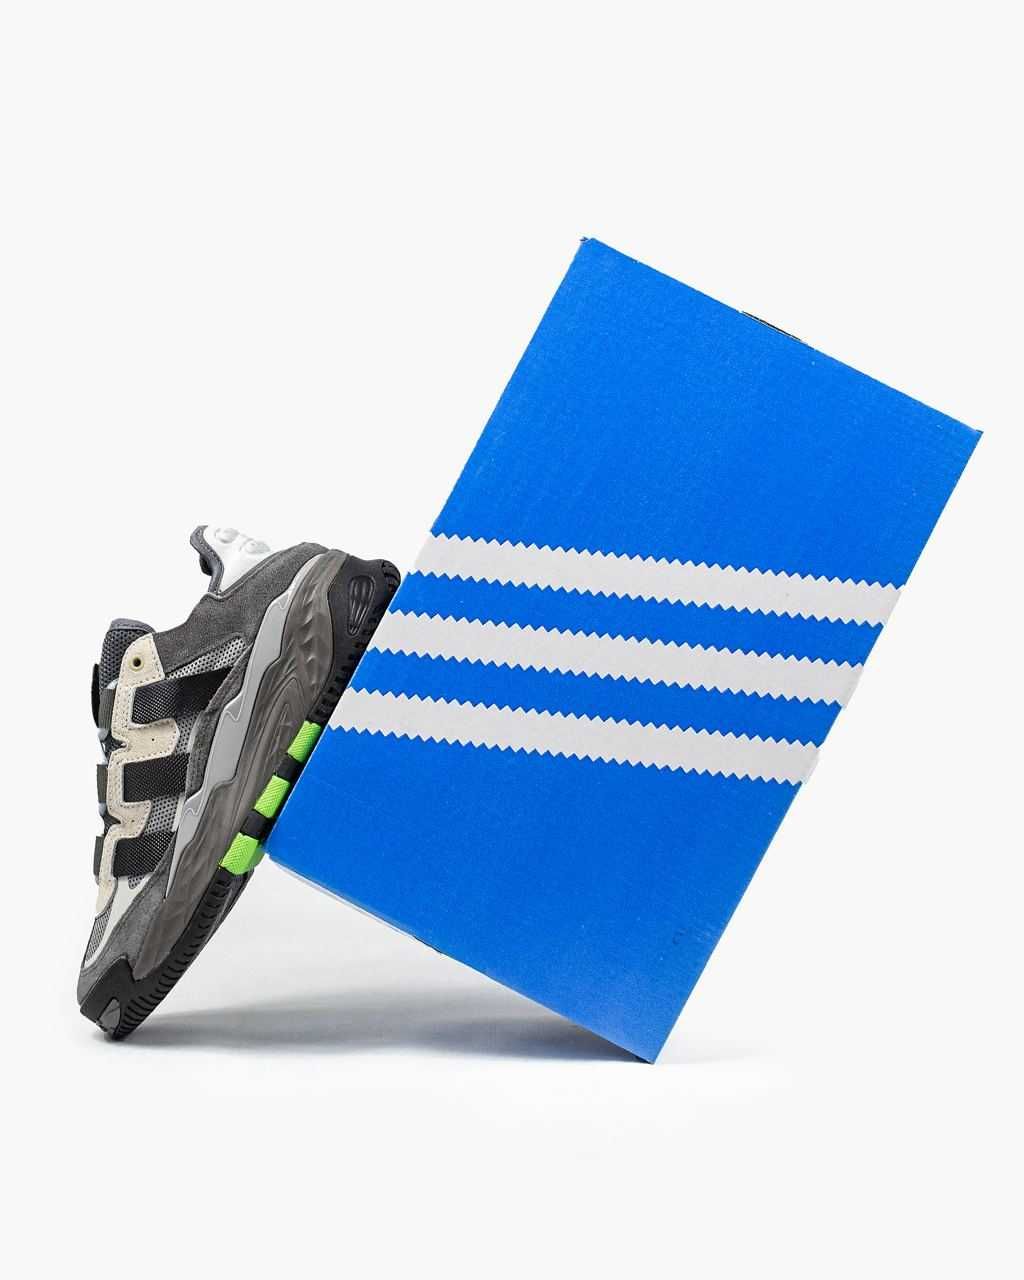 Adidas Niteball Gray кроссовки мужские адидас найтбол (adidas niteball